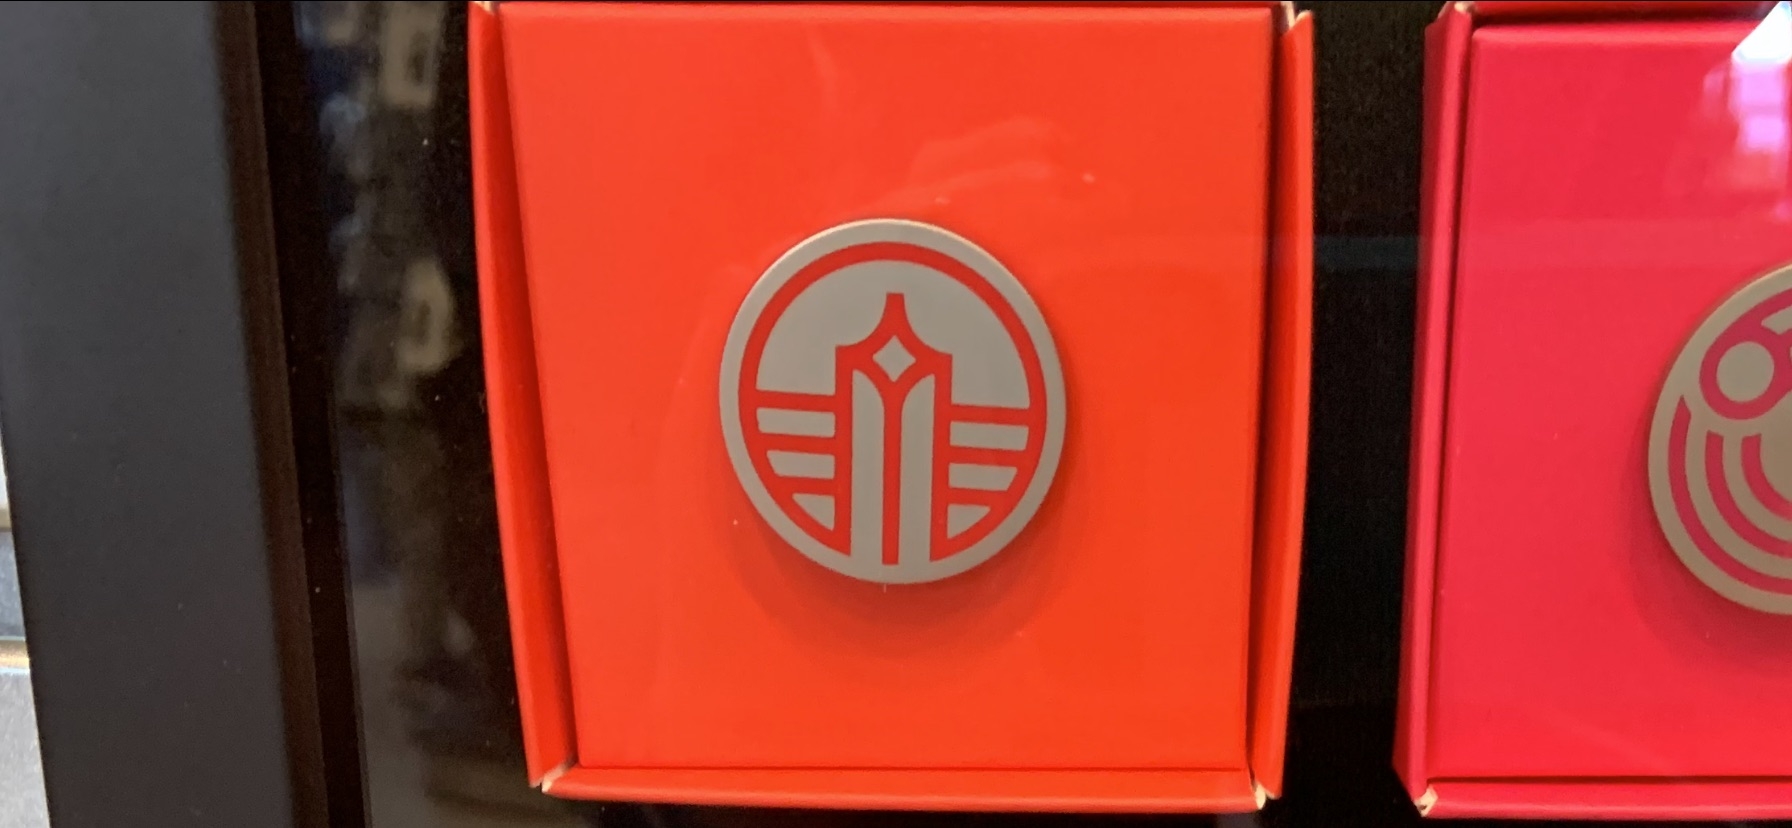 EPCOT pavilion logo pins 12/23/19 22